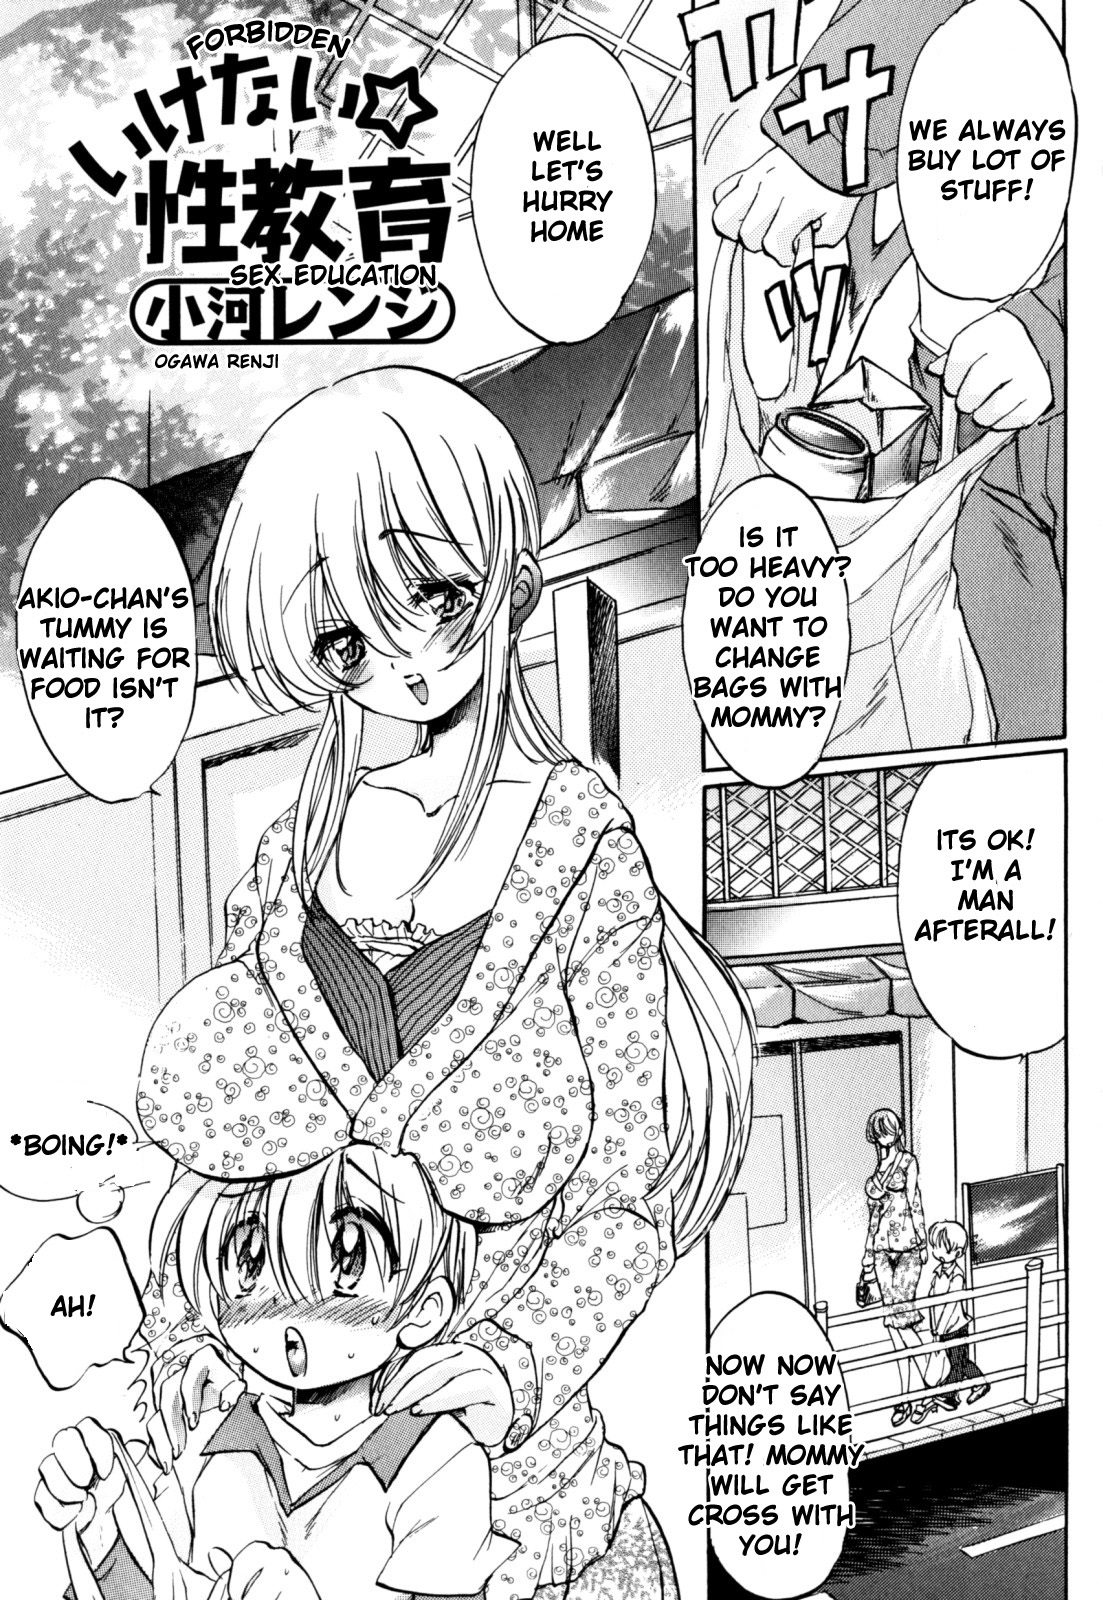 Forbidden Sex Education hentai manga